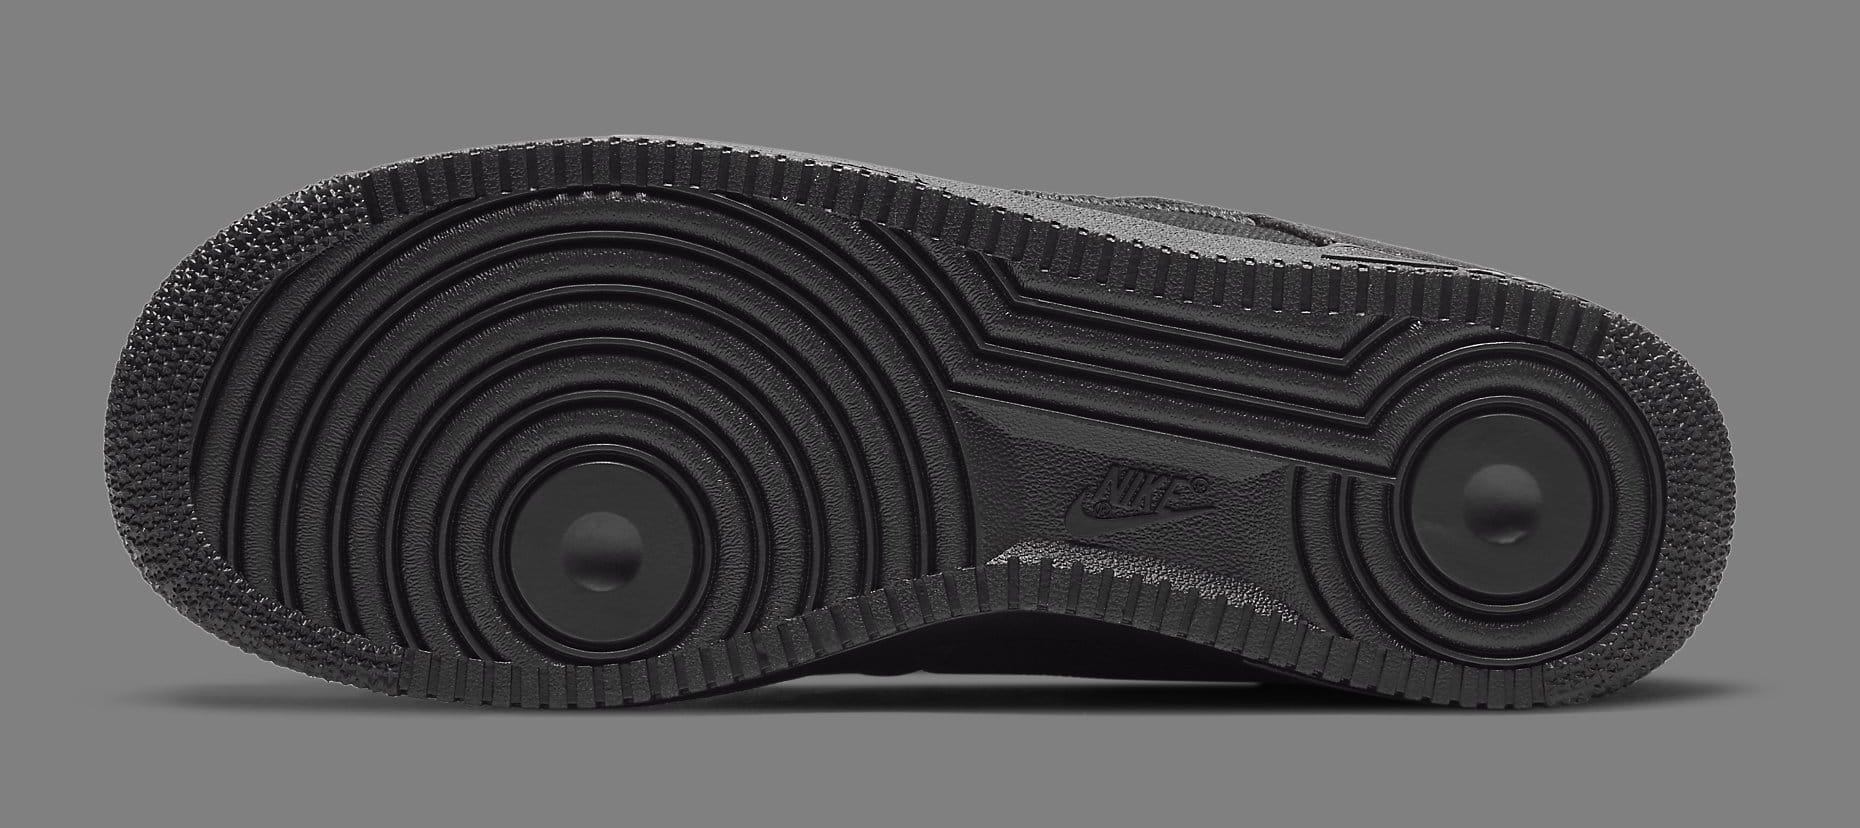 Stussy X Nike Air Force 1 Is Dropping Soon: Release Info – Footwear News